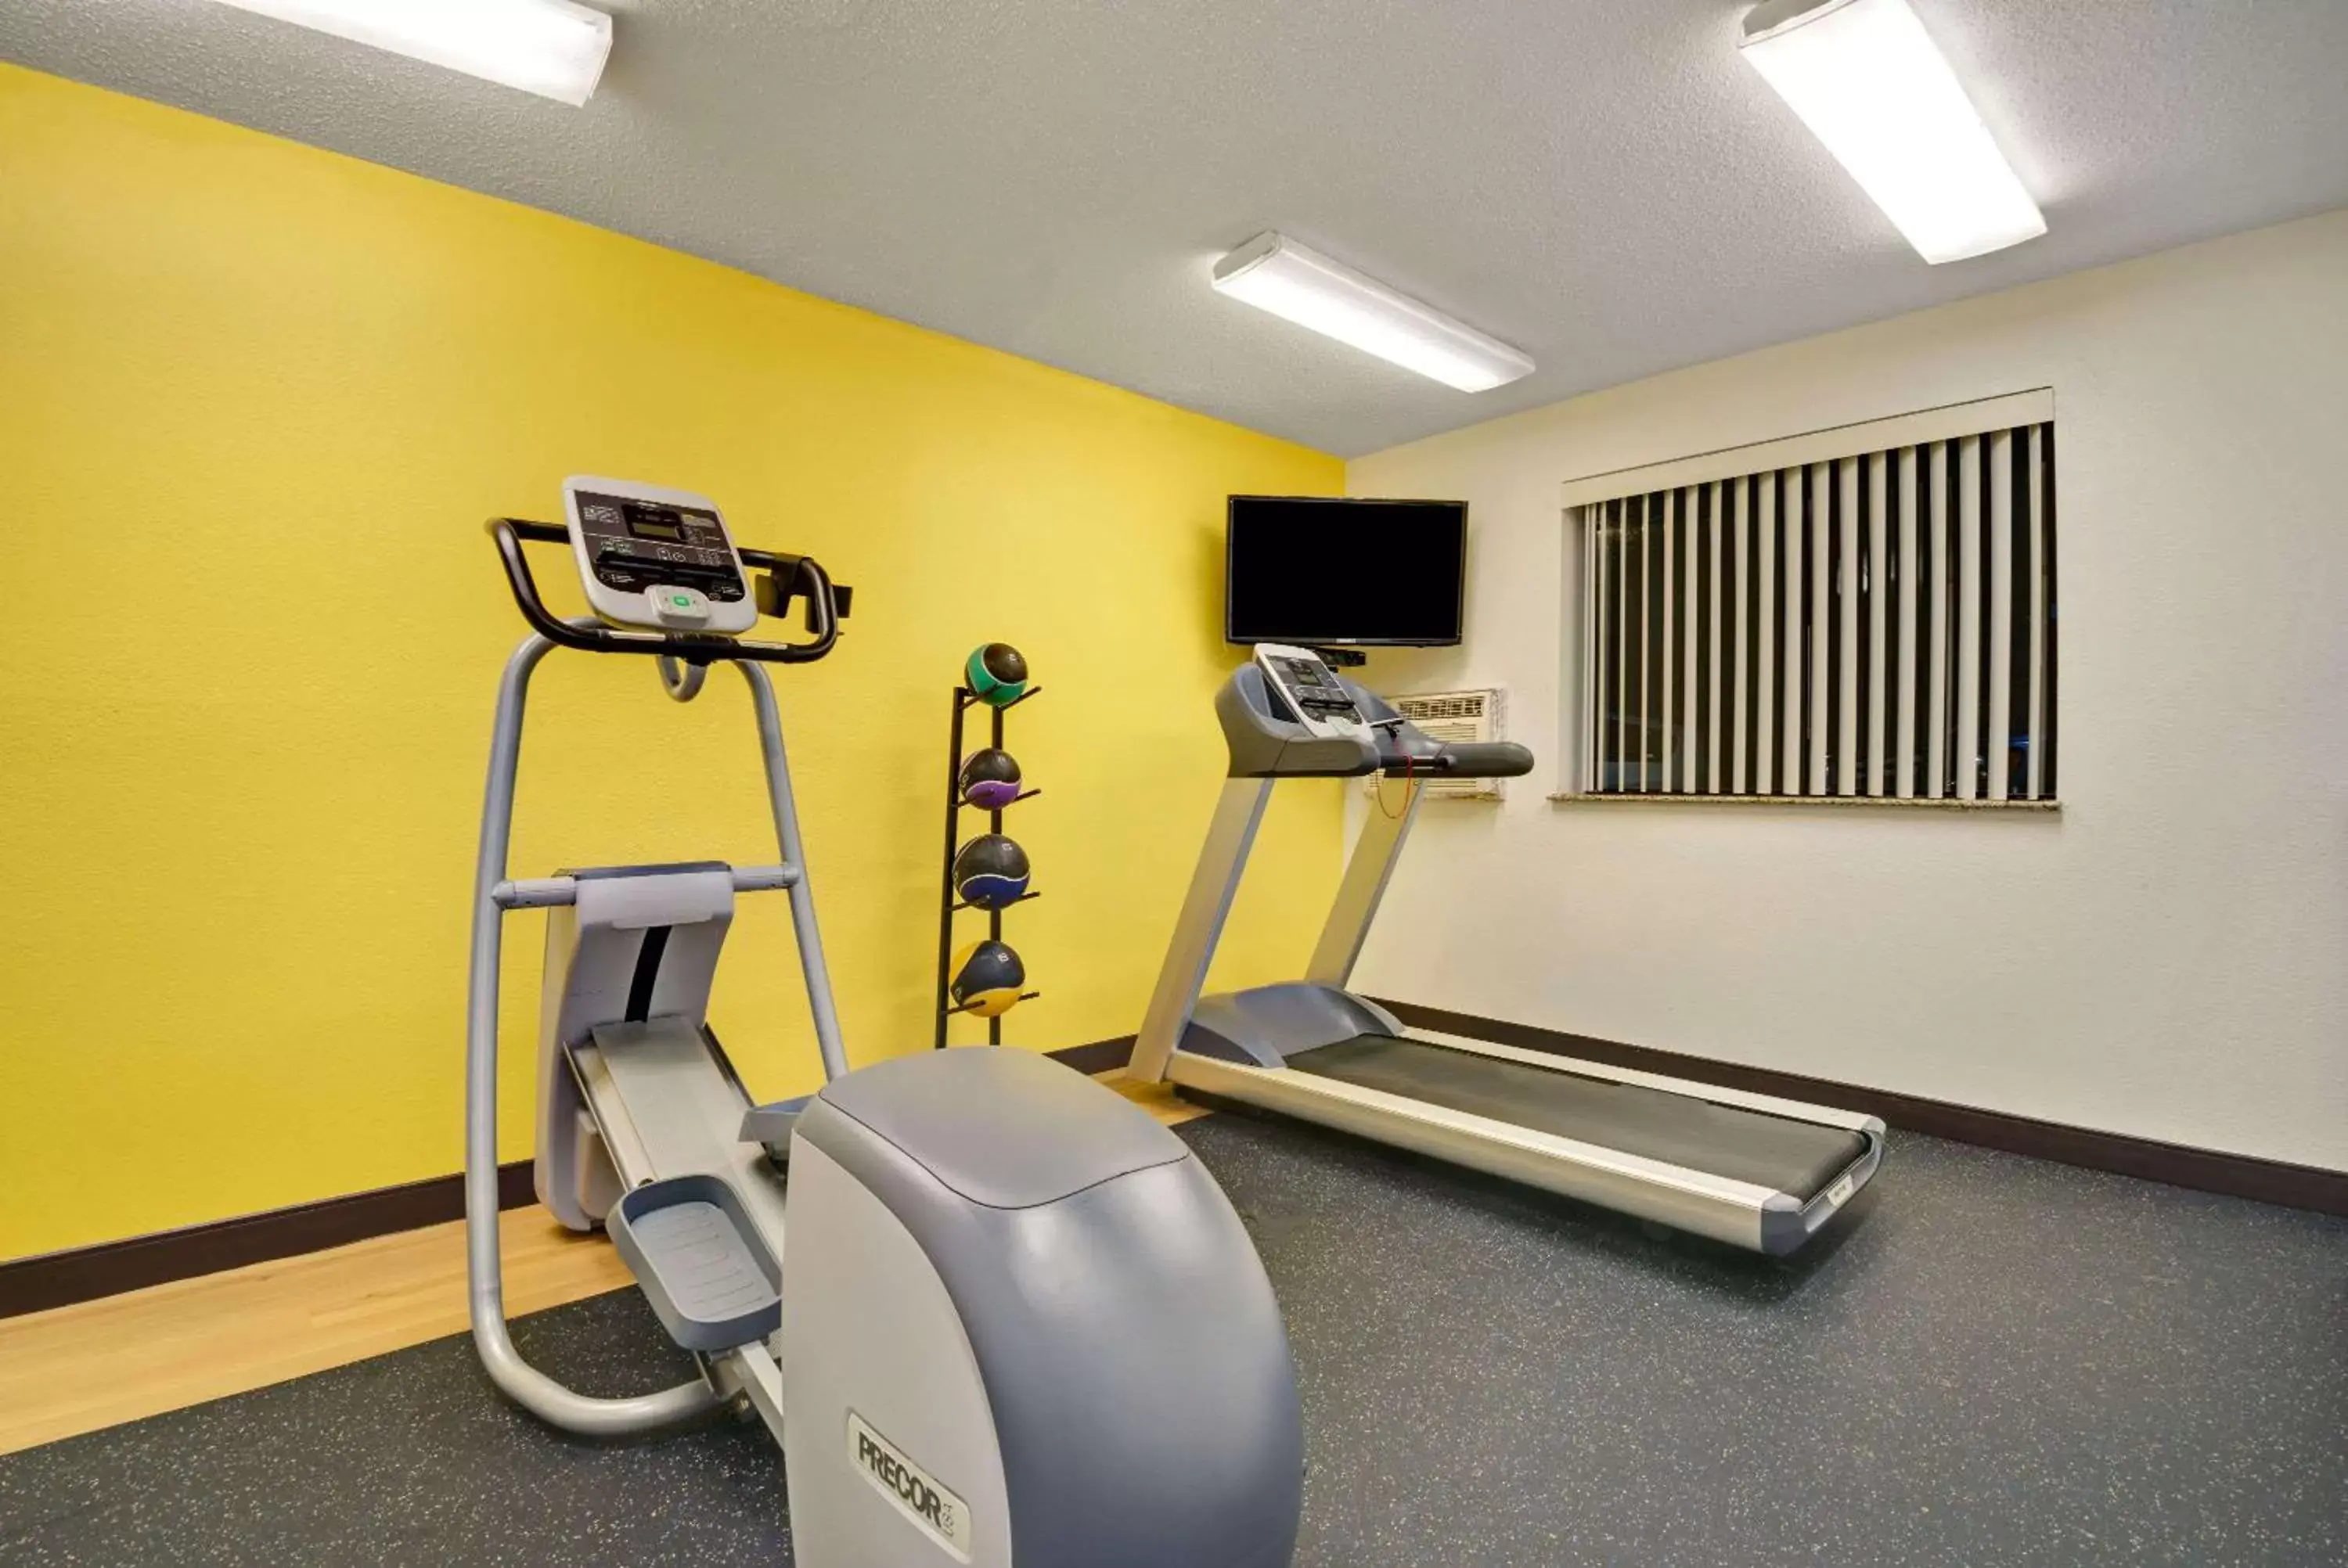 Fitness centre/facilities, Fitness Center/Facilities in Days Inn by Wyndham Torrington